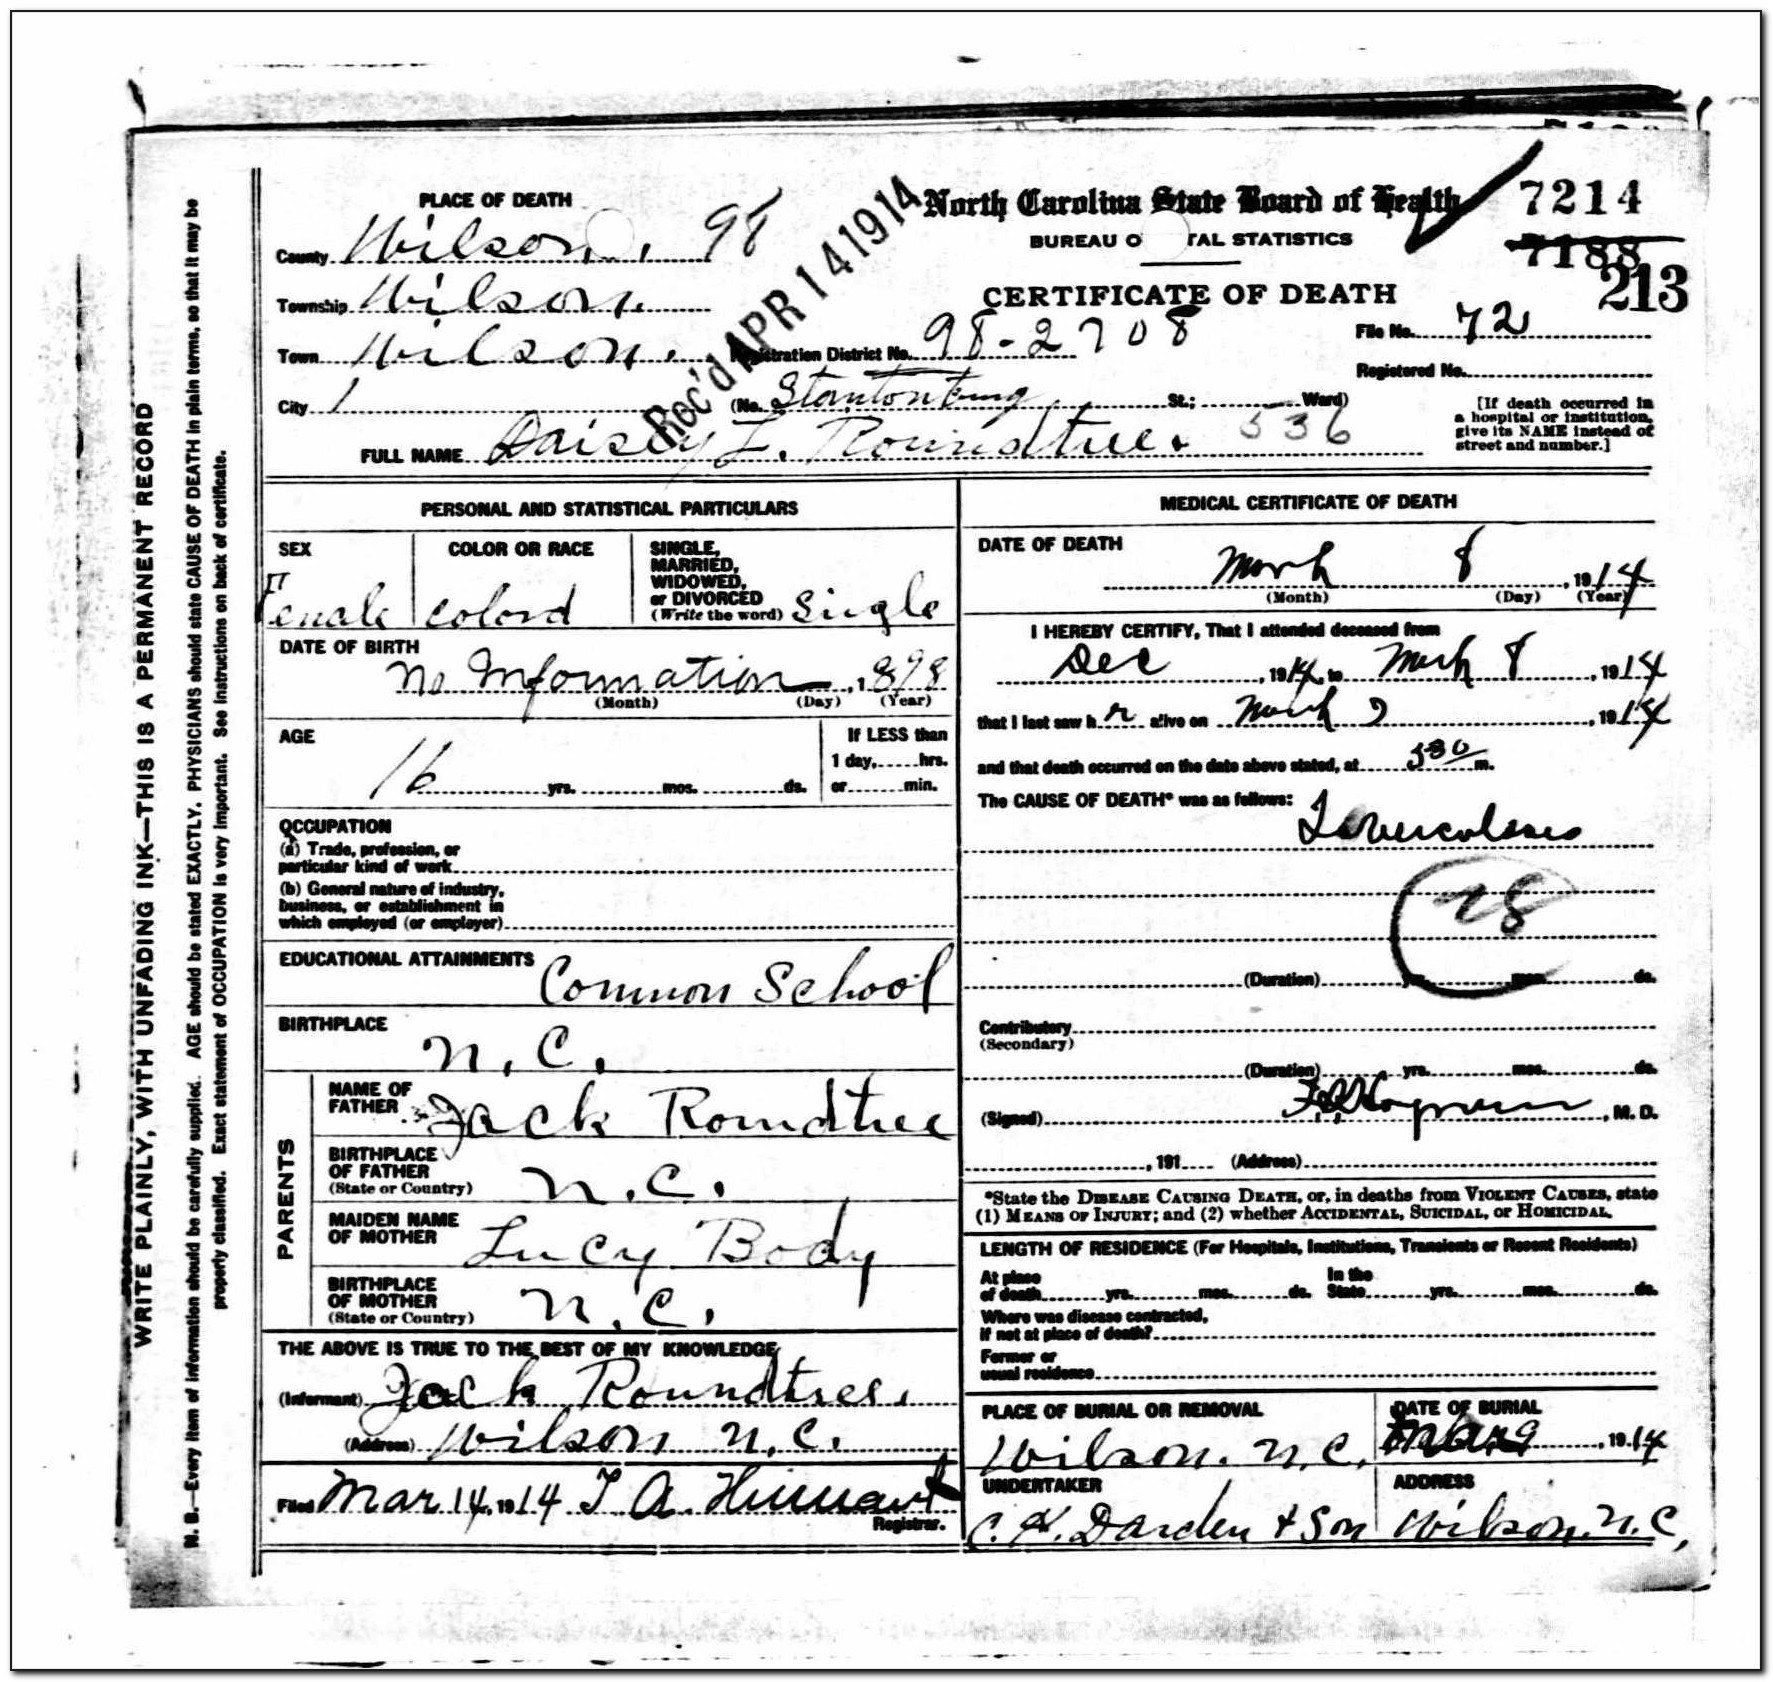 Pitt County Birth Certificate